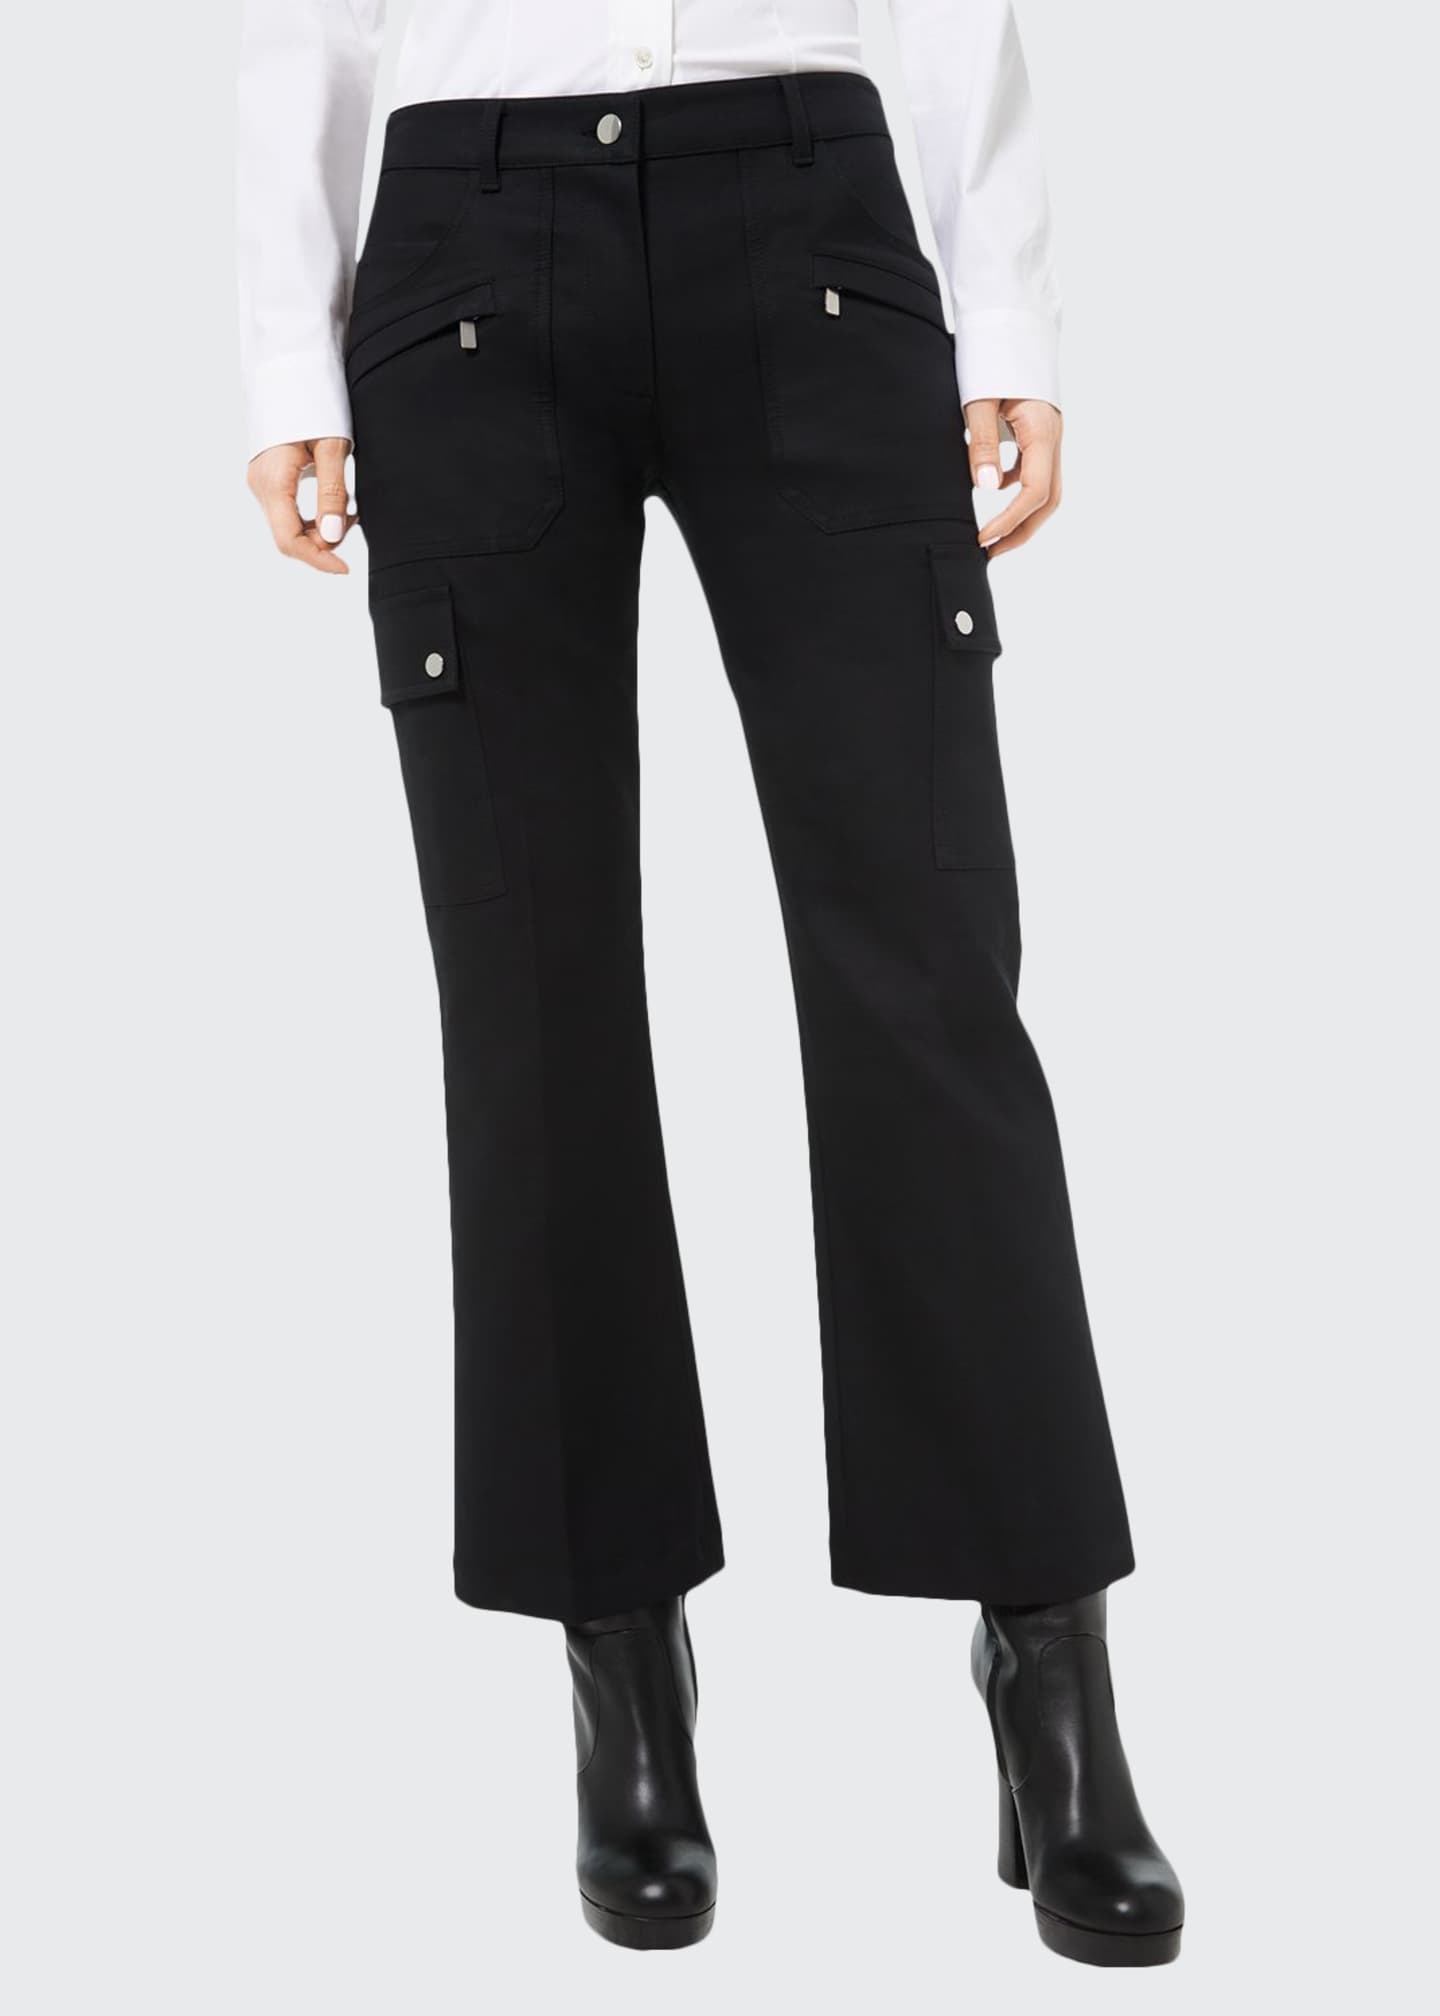 Michael Kors Collection Cotton Twill Cargo Flare Pants - Bergdorf Goodman